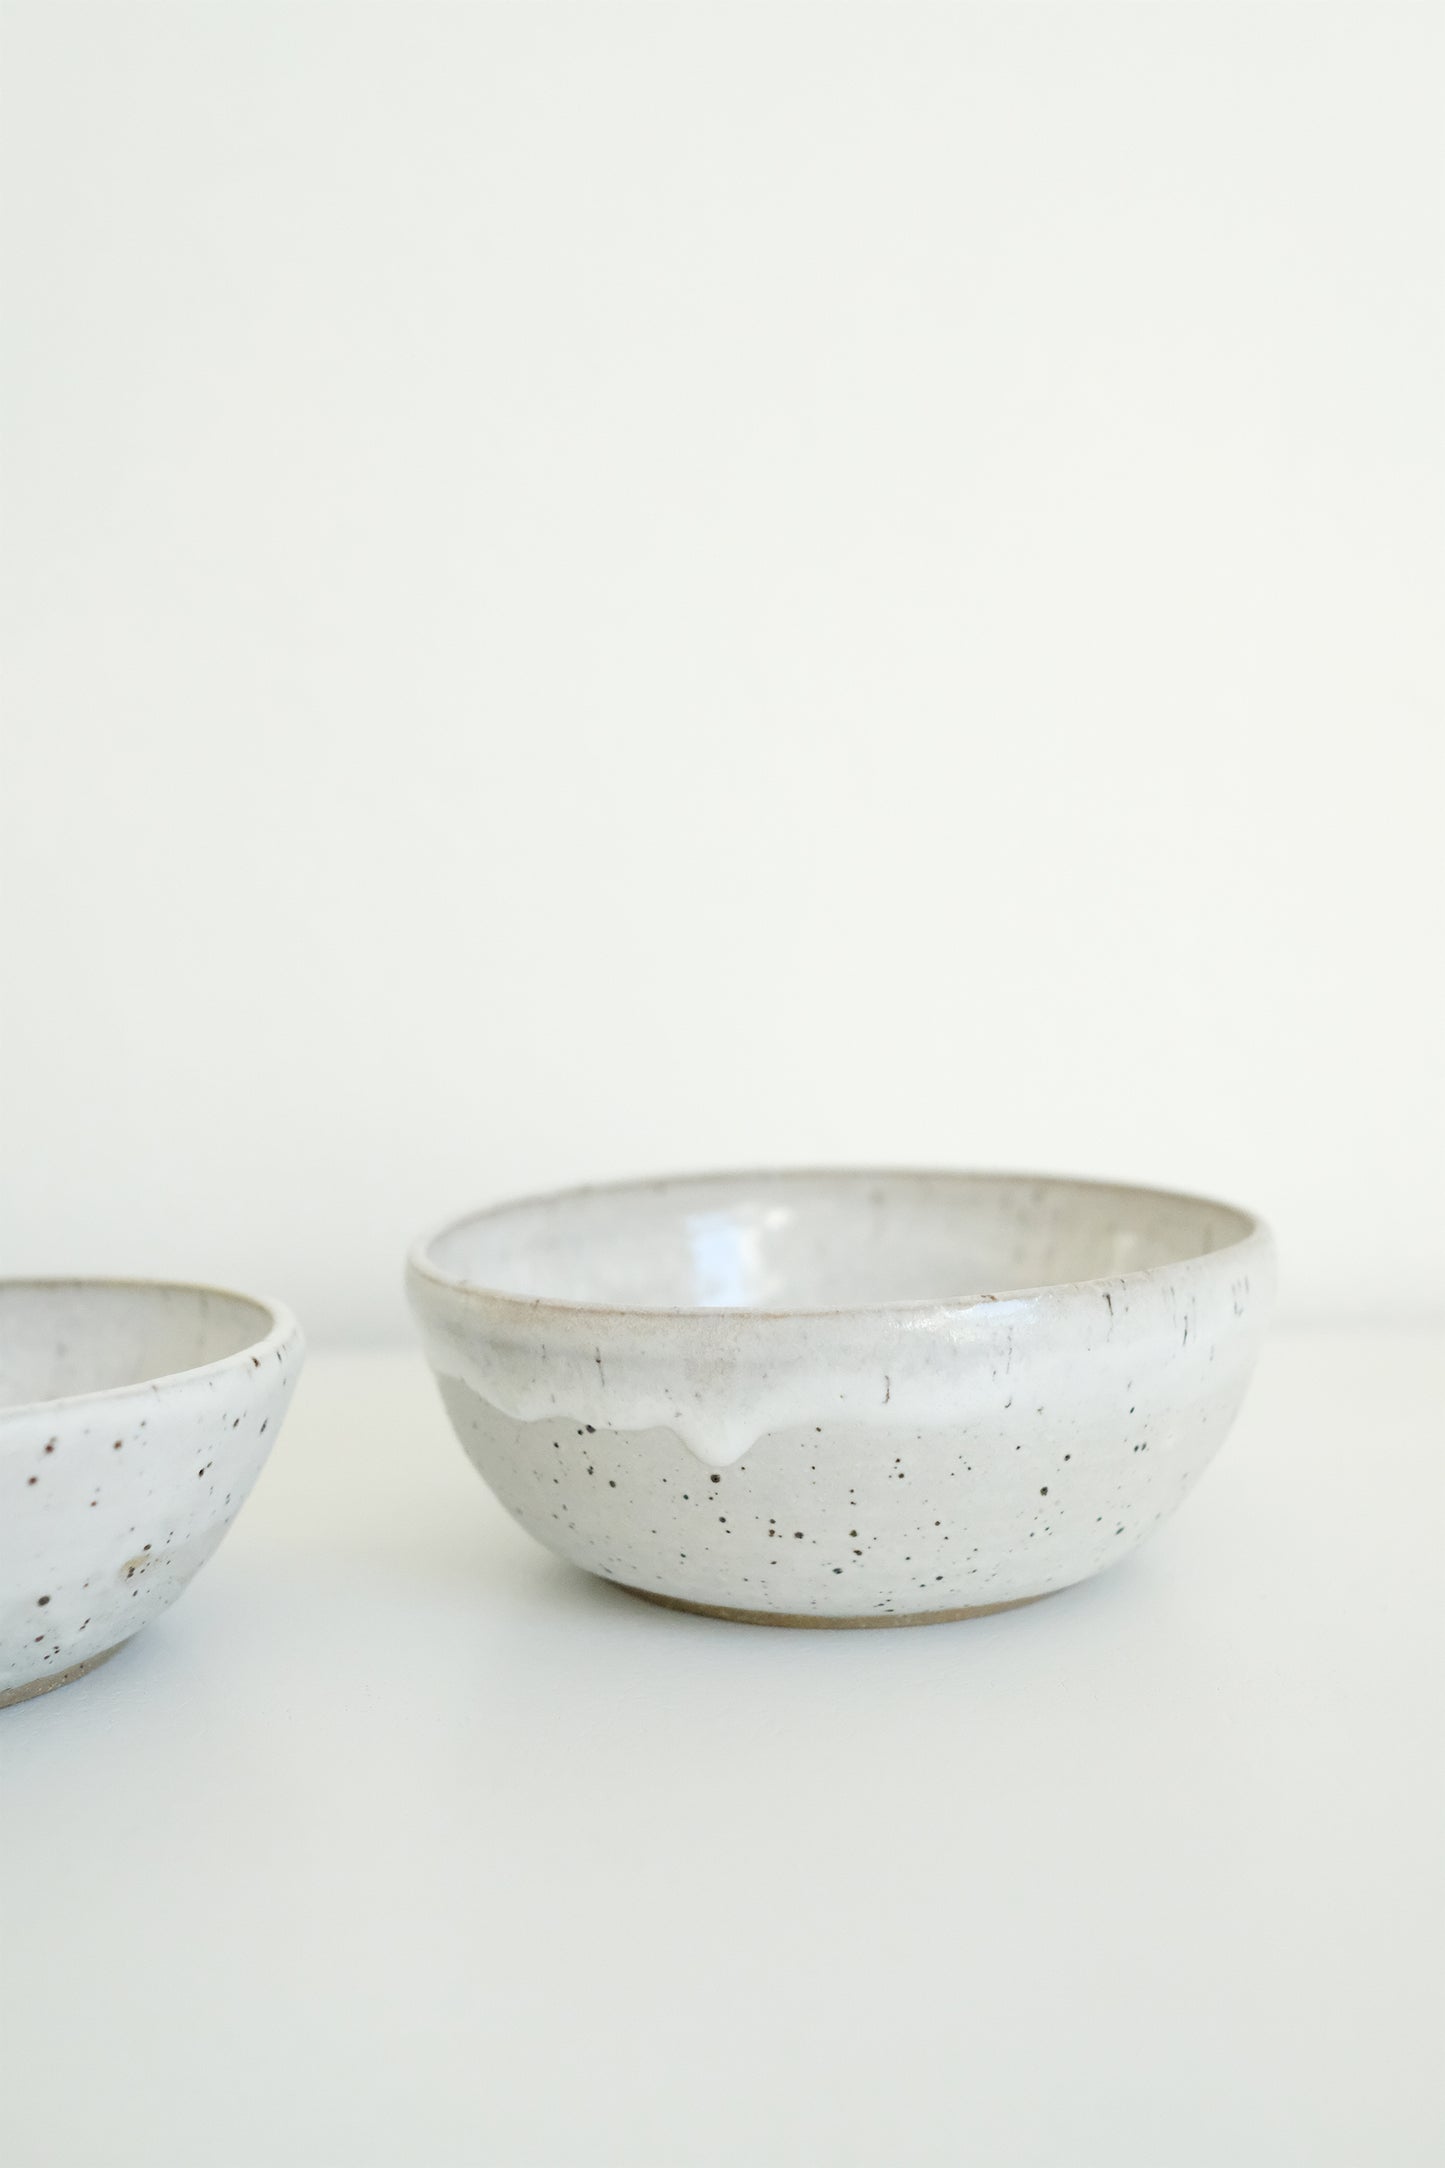 nesting bowls #2 - set of 2